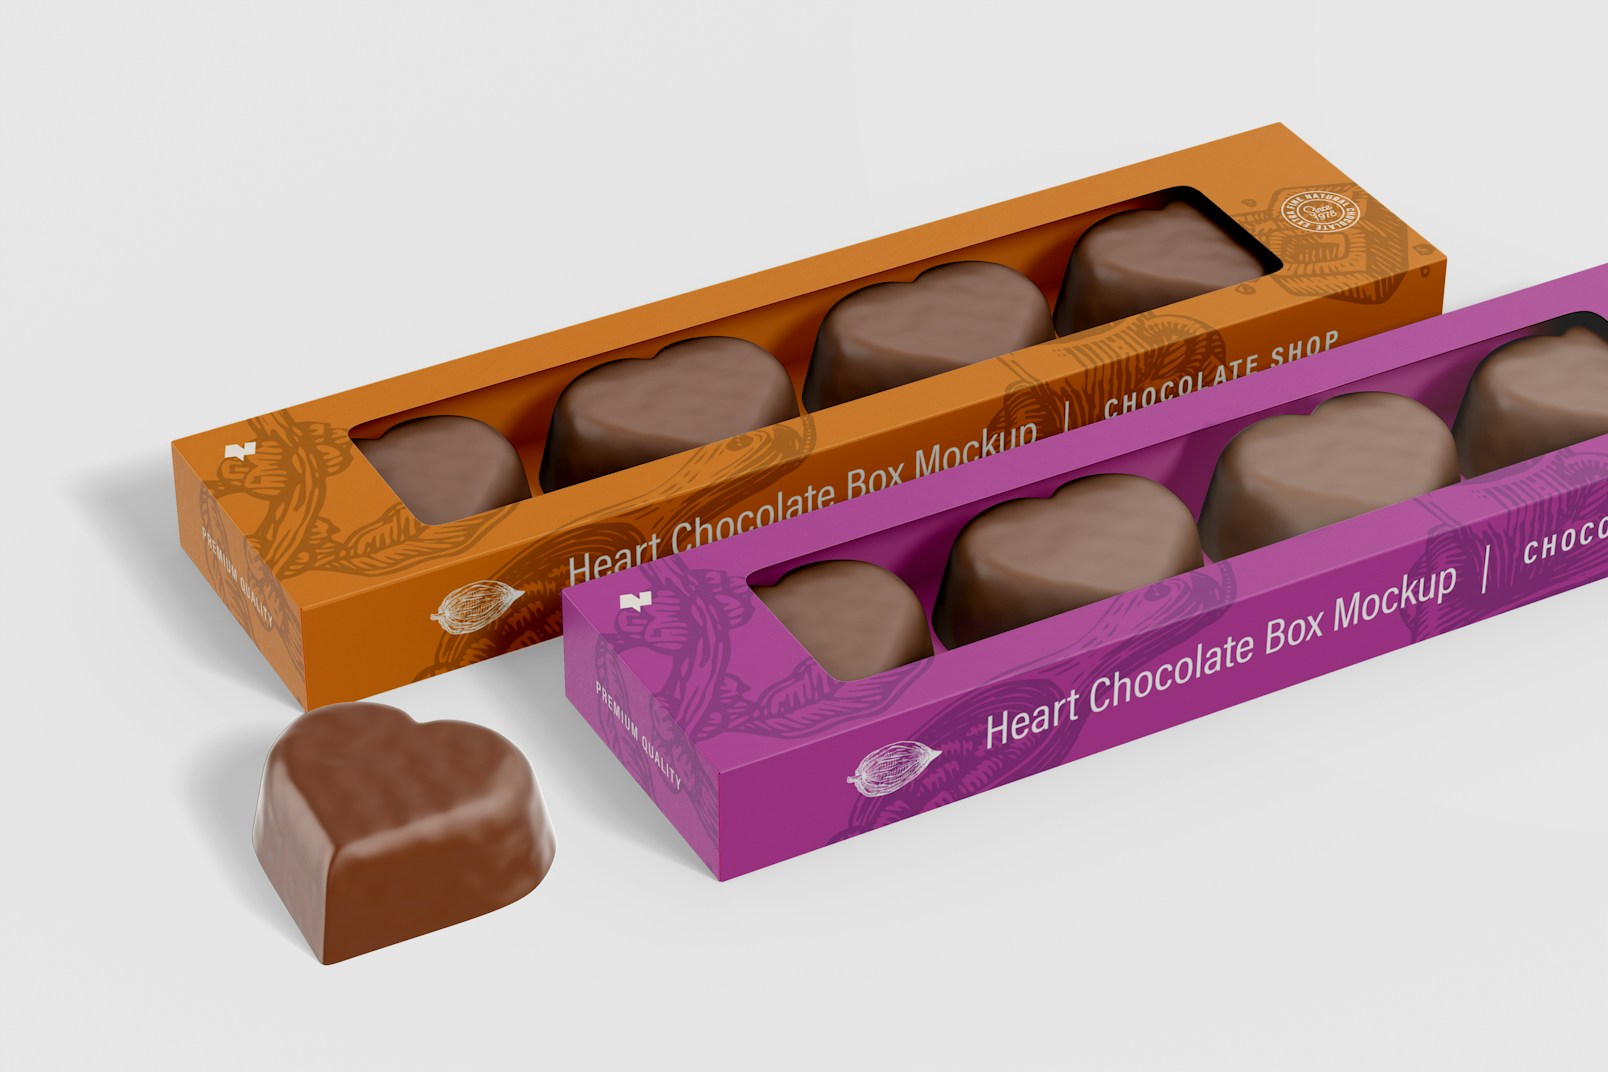 Heart Chocolate Box Mockup, with Nuts